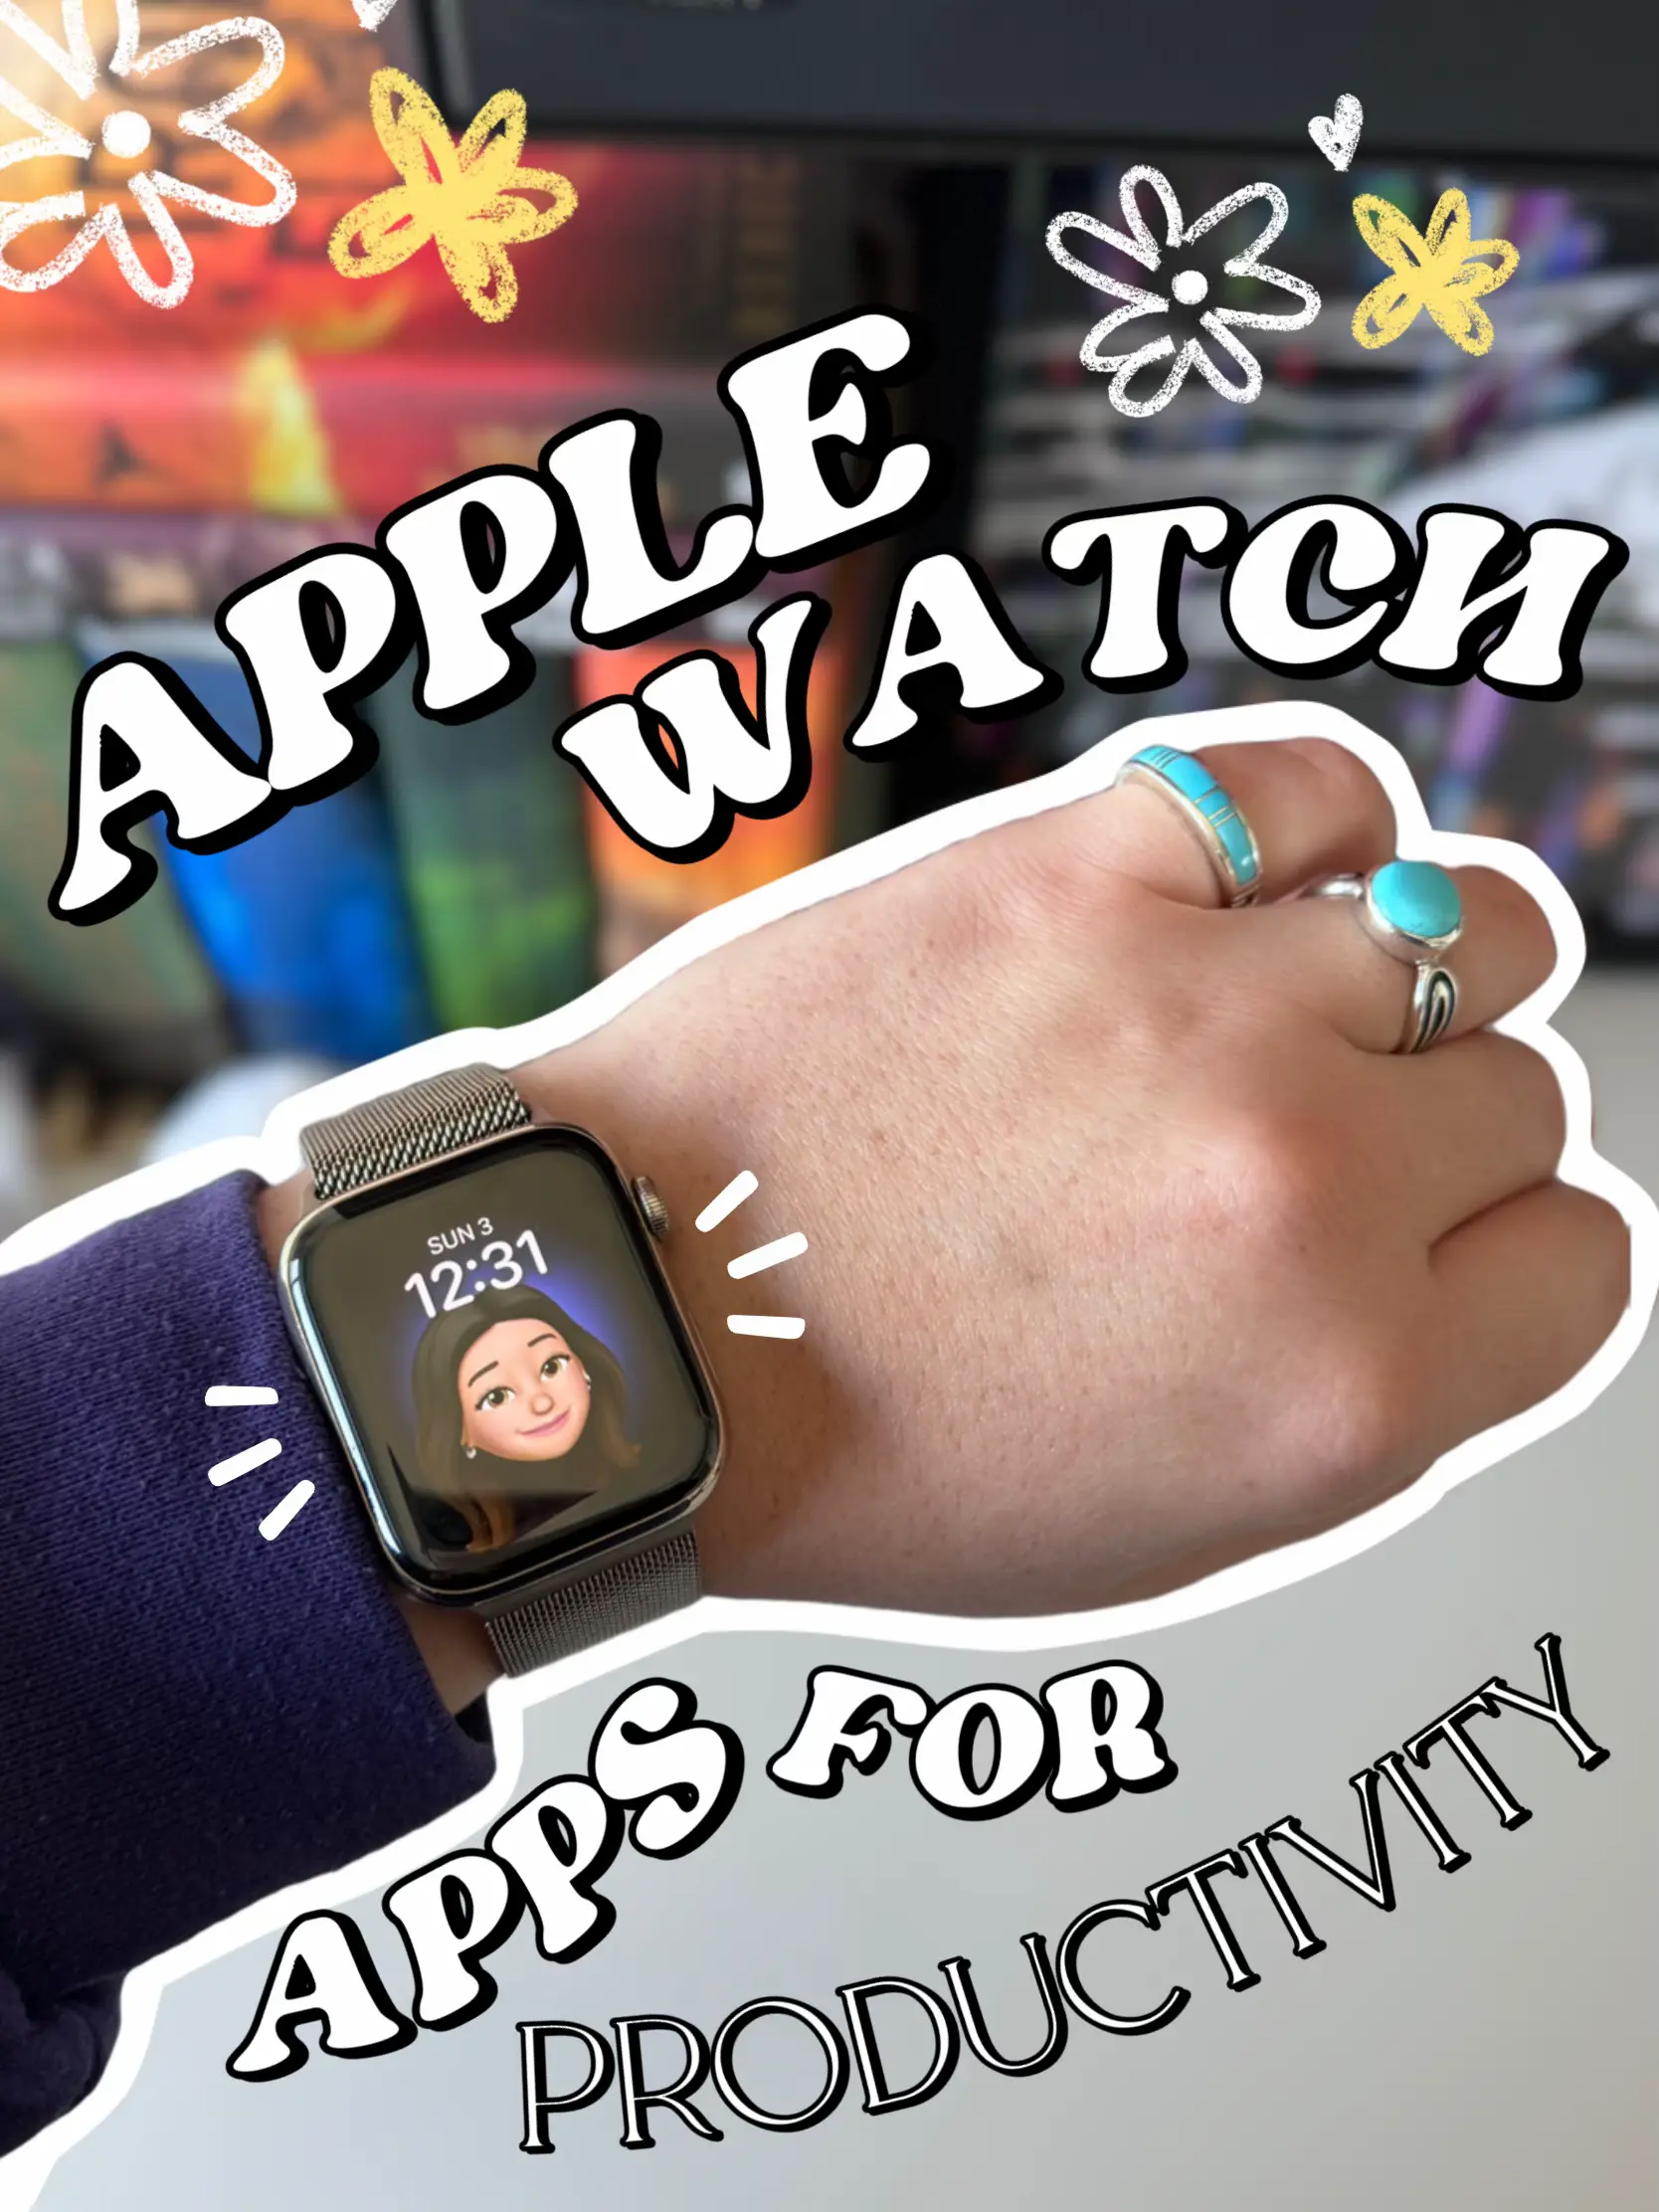 Best Productivity Apps for Apple Watch - Lemon8 Search